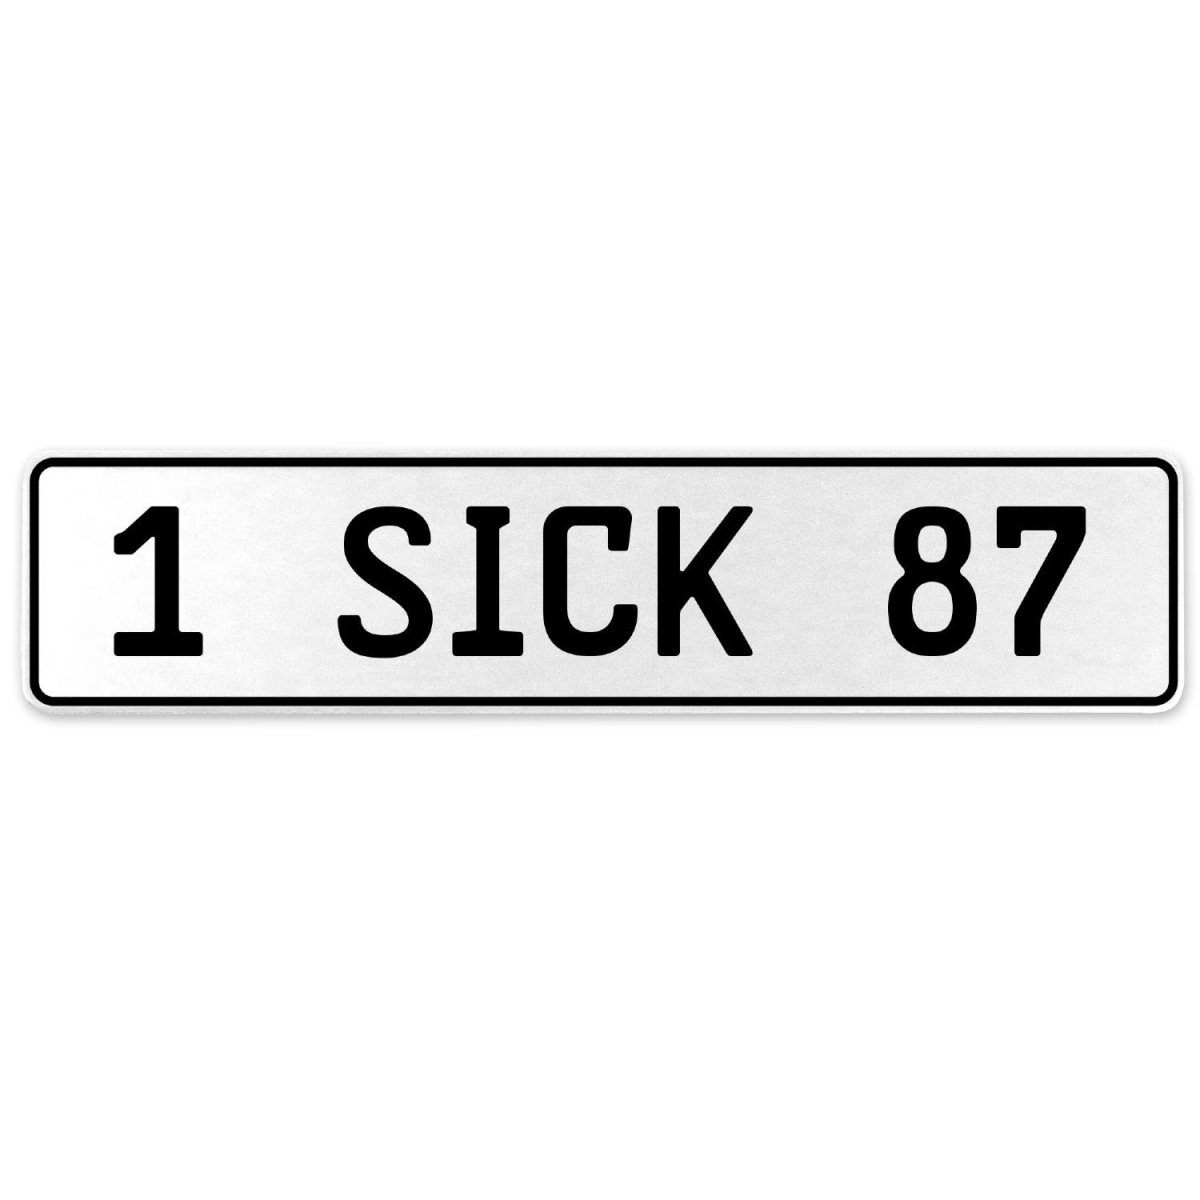 554486 1 Sick 87 - White Aluminum Street Sign Mancave Euro Plate Name Door Sign Wall